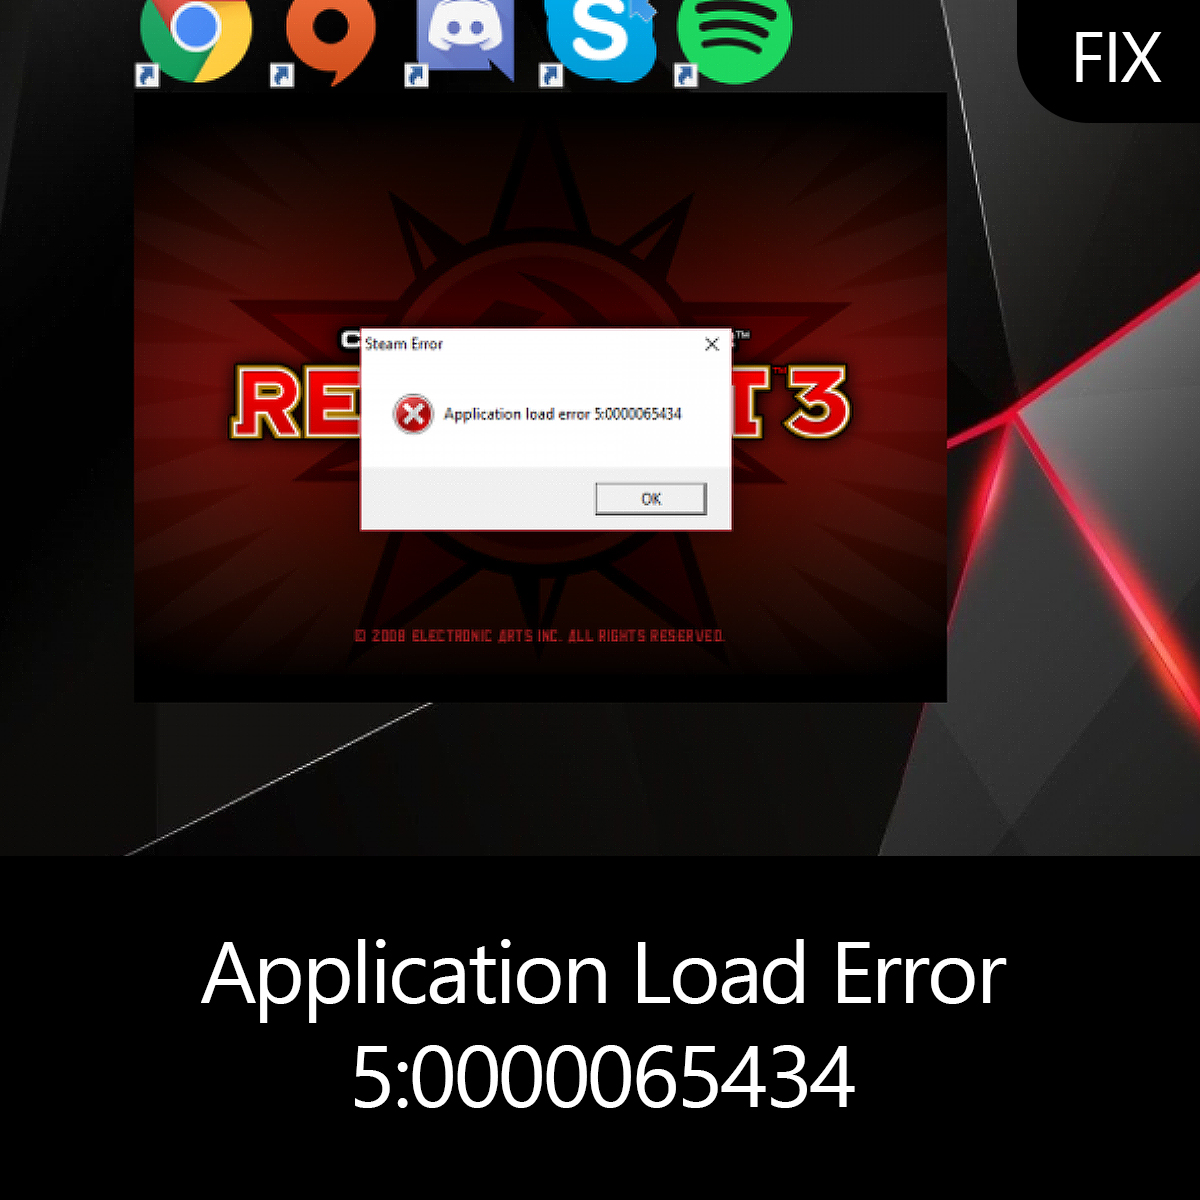 steam error application load error 5